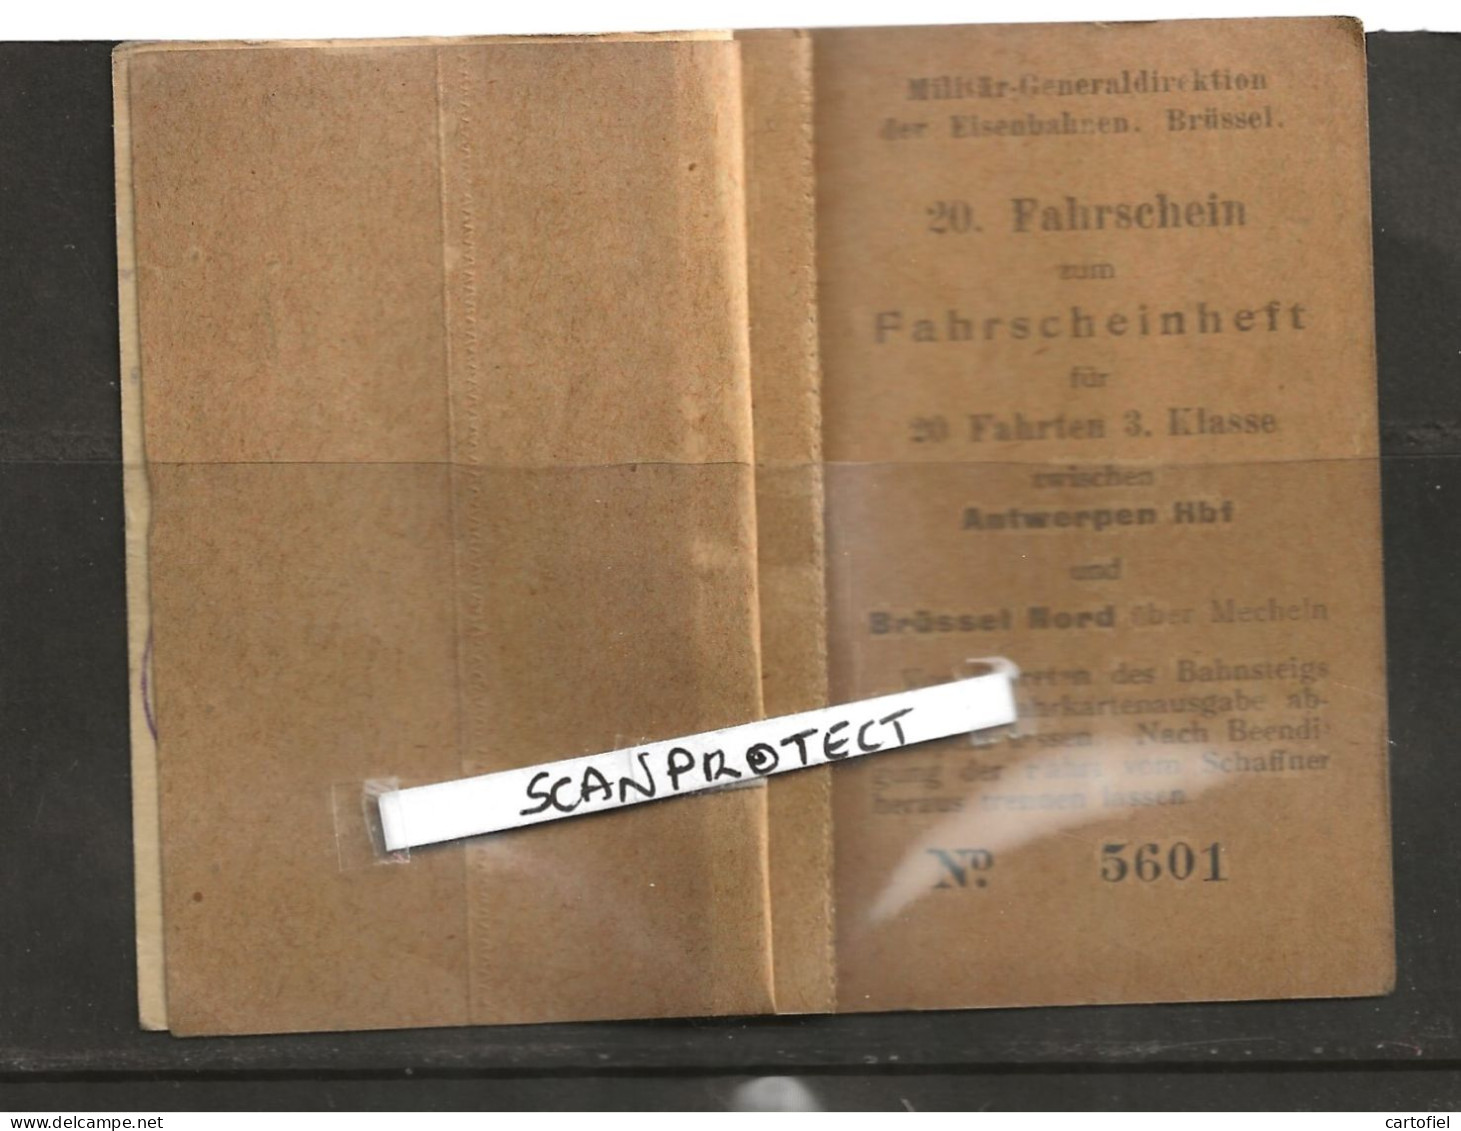 FAHRSCHEINHEFT-BELGIQUE-GUERRE-1916-ANTWERPEN-BRUSSEL-PHOTO+TAMPON-BRUSSEL-NORD-CARNET-2 FAHRTEN-VOYEZ 4 SCANS - Europe